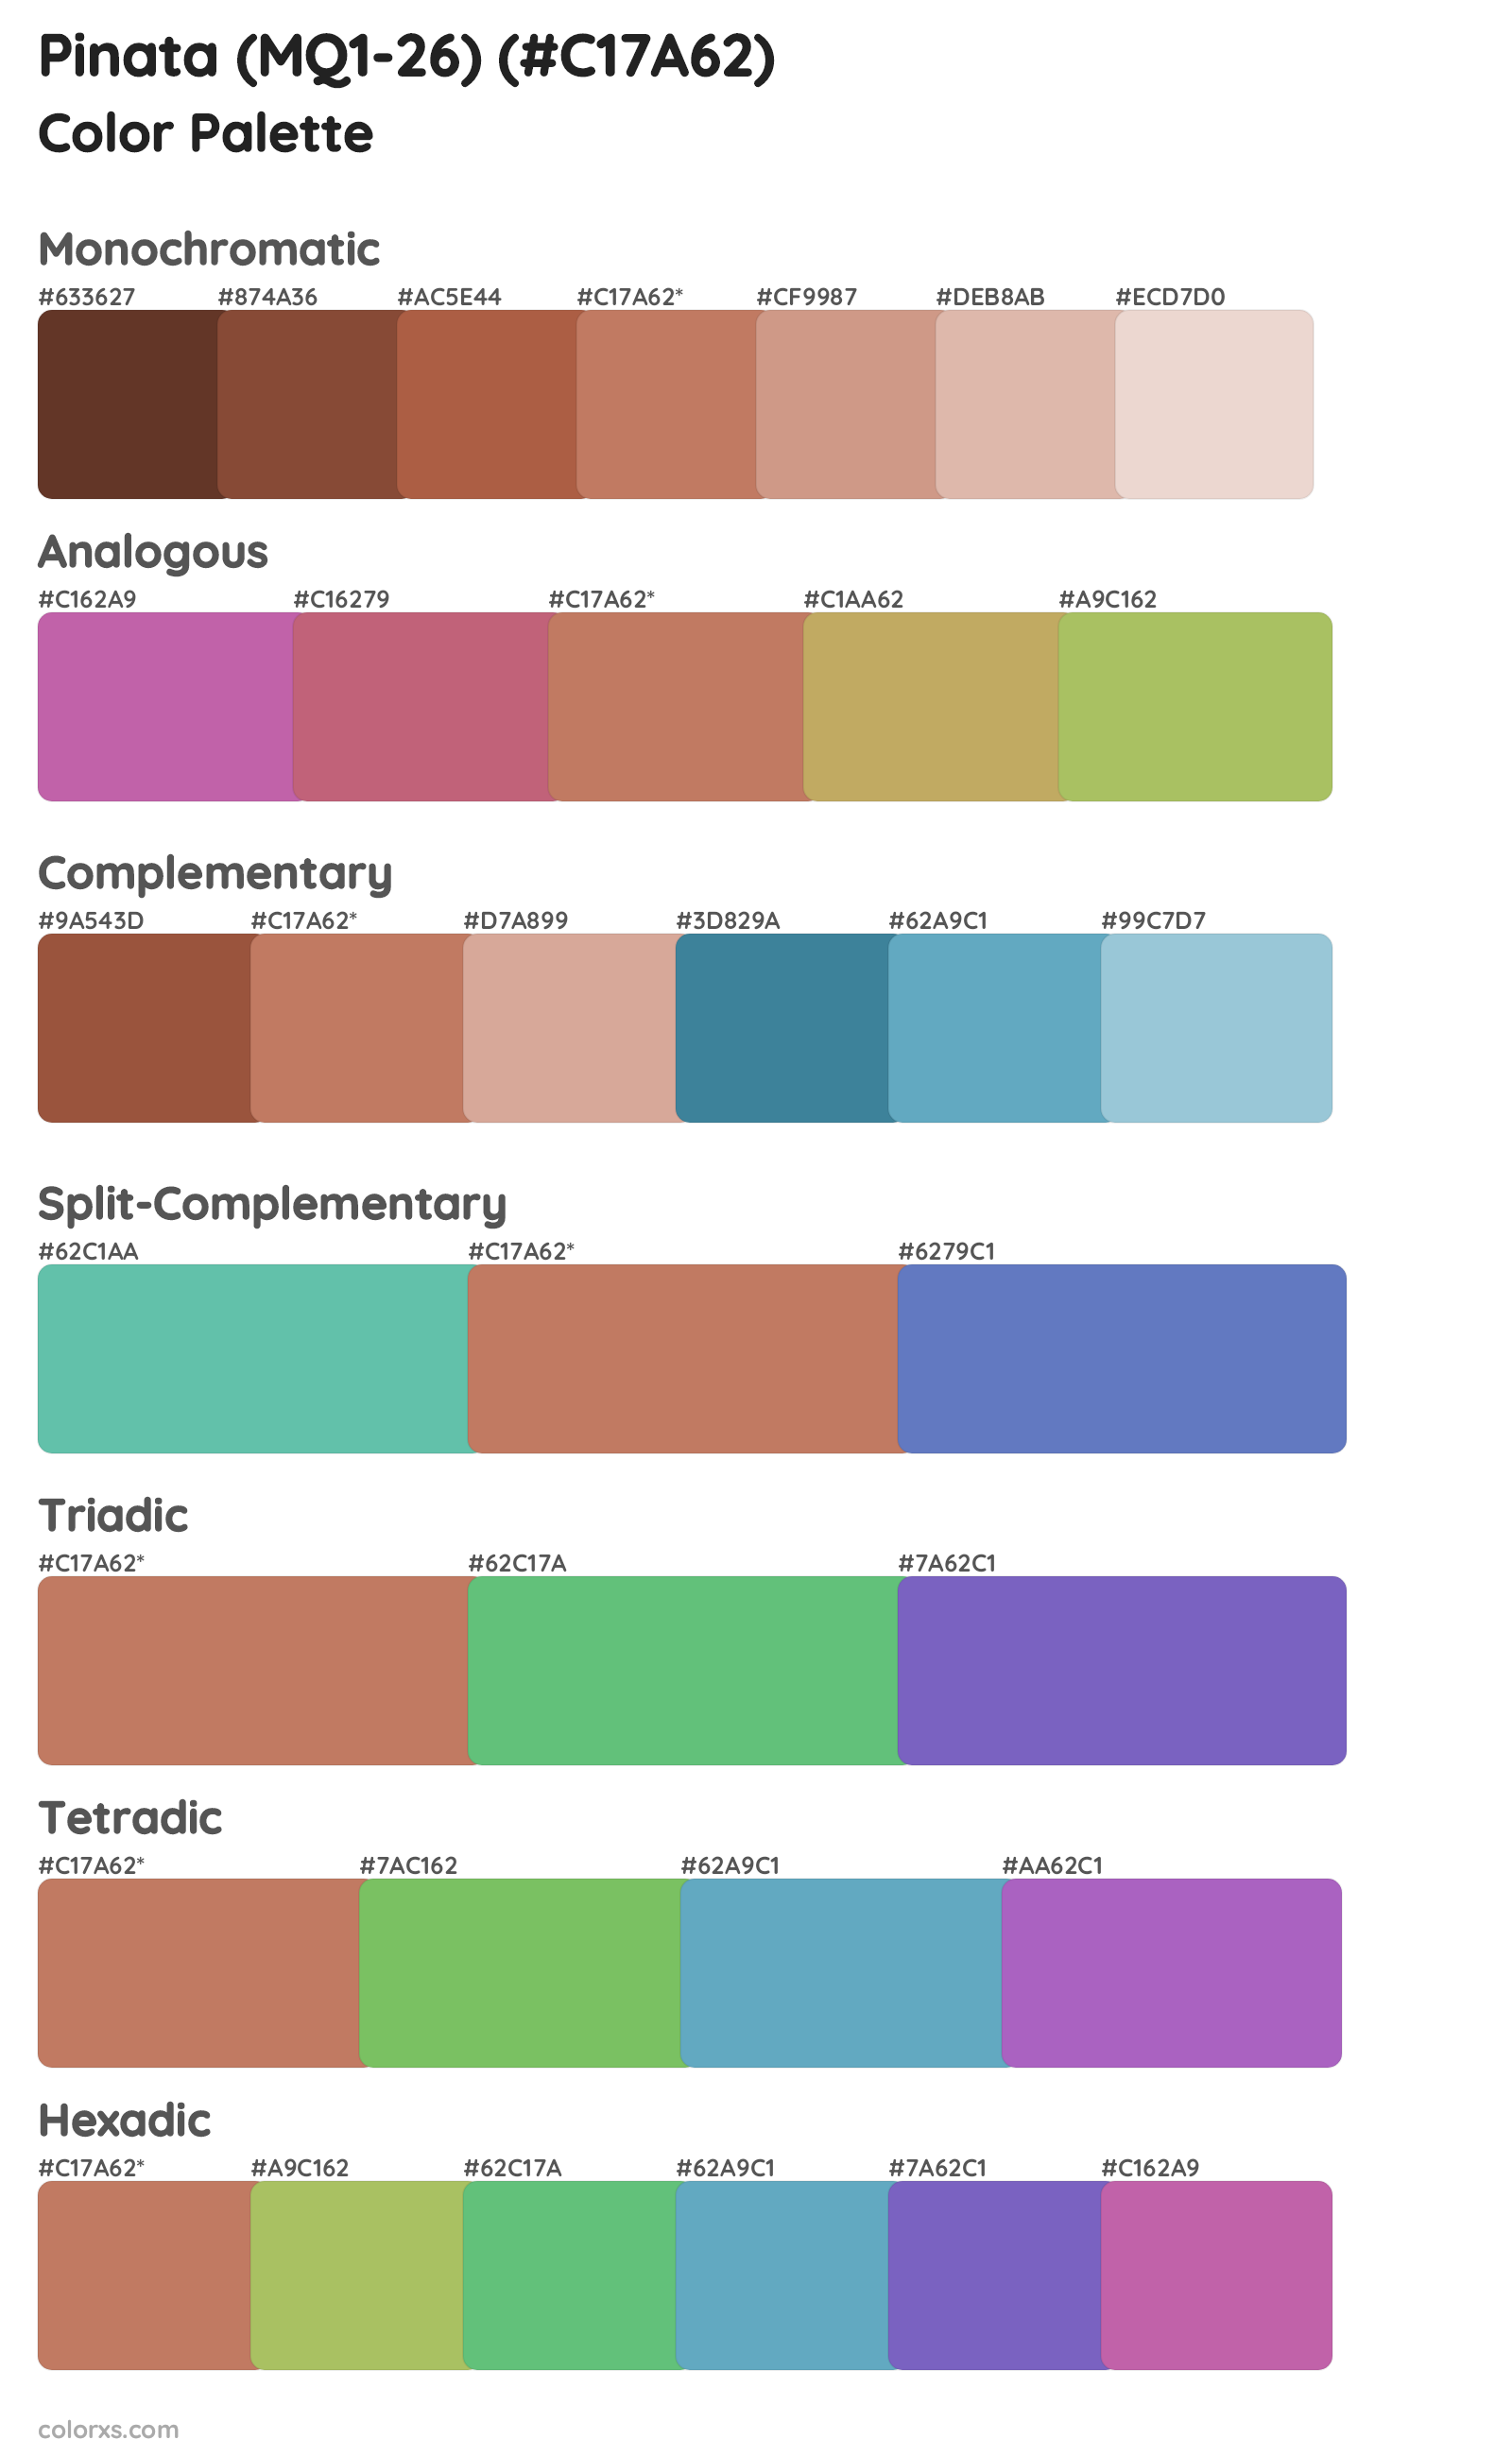 Pinata (MQ1-26) Color Scheme Palettes